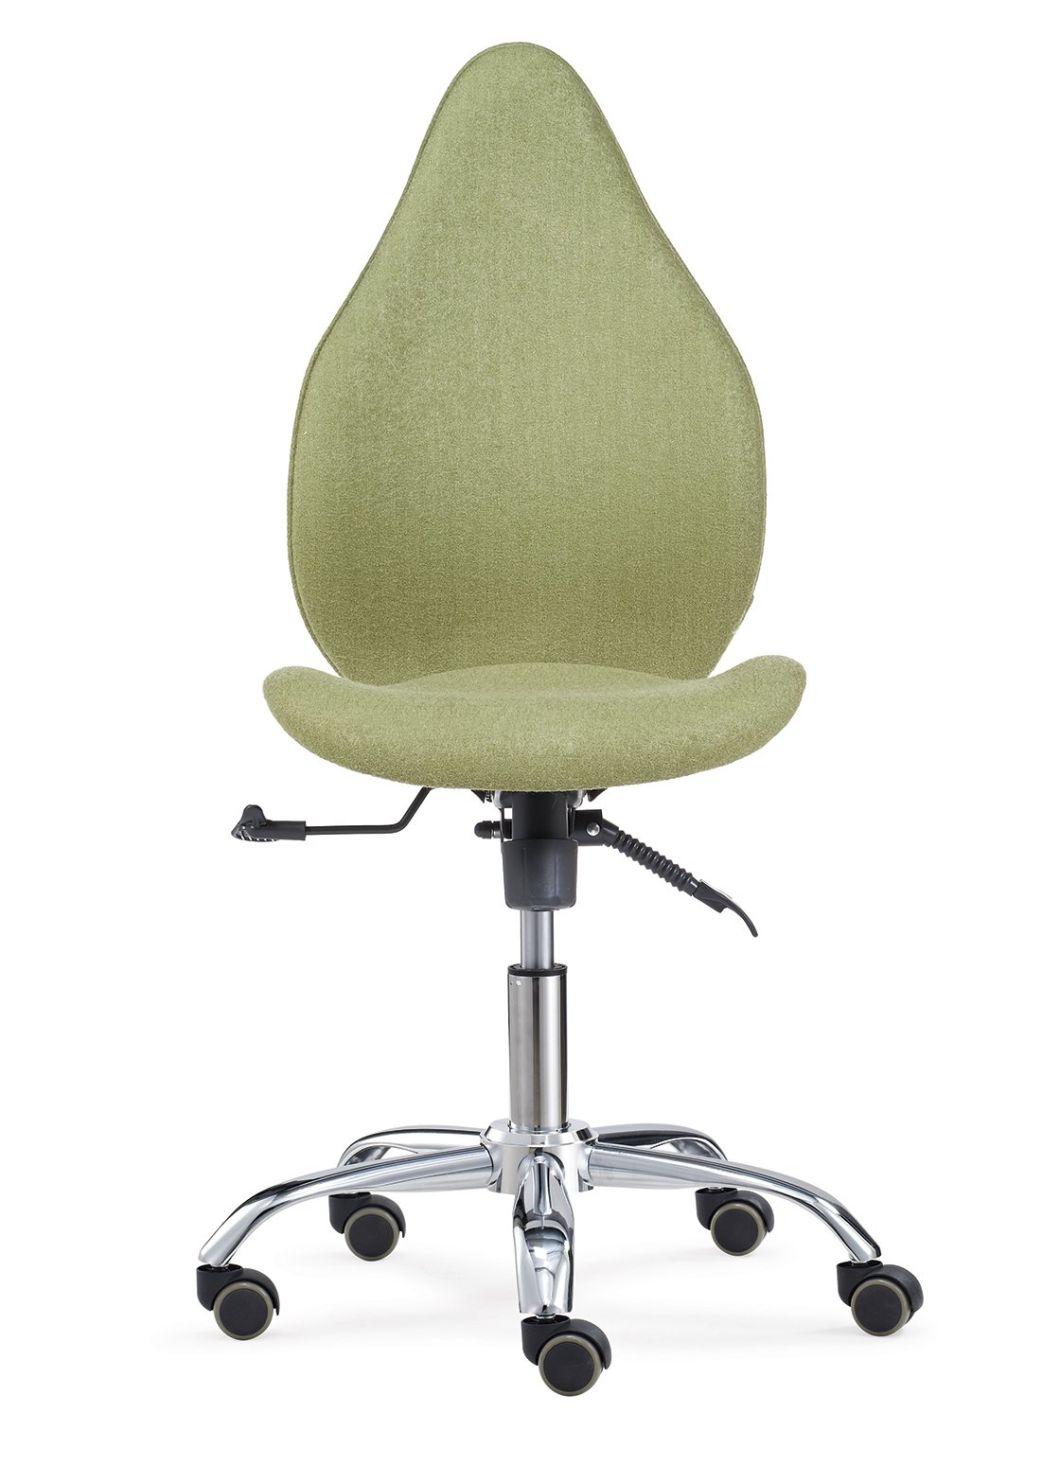 Ergonomic Adjustable High Back Swivel Mesh Office Chair